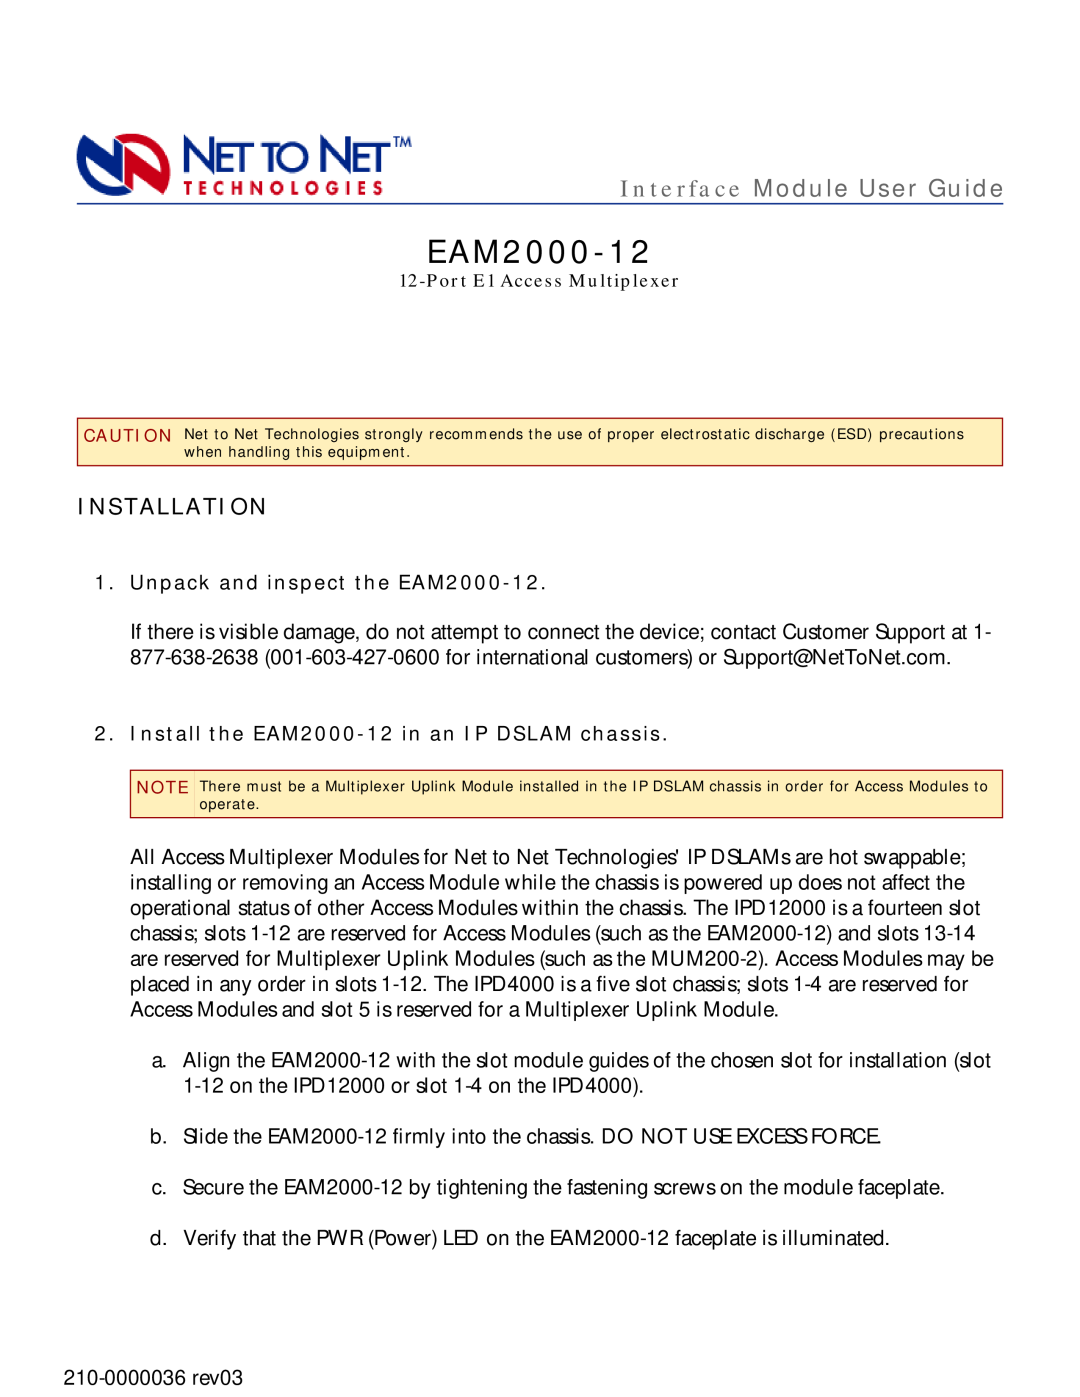 Paradyne EAM2000-12 manual Installation, Interface Module User Guide 